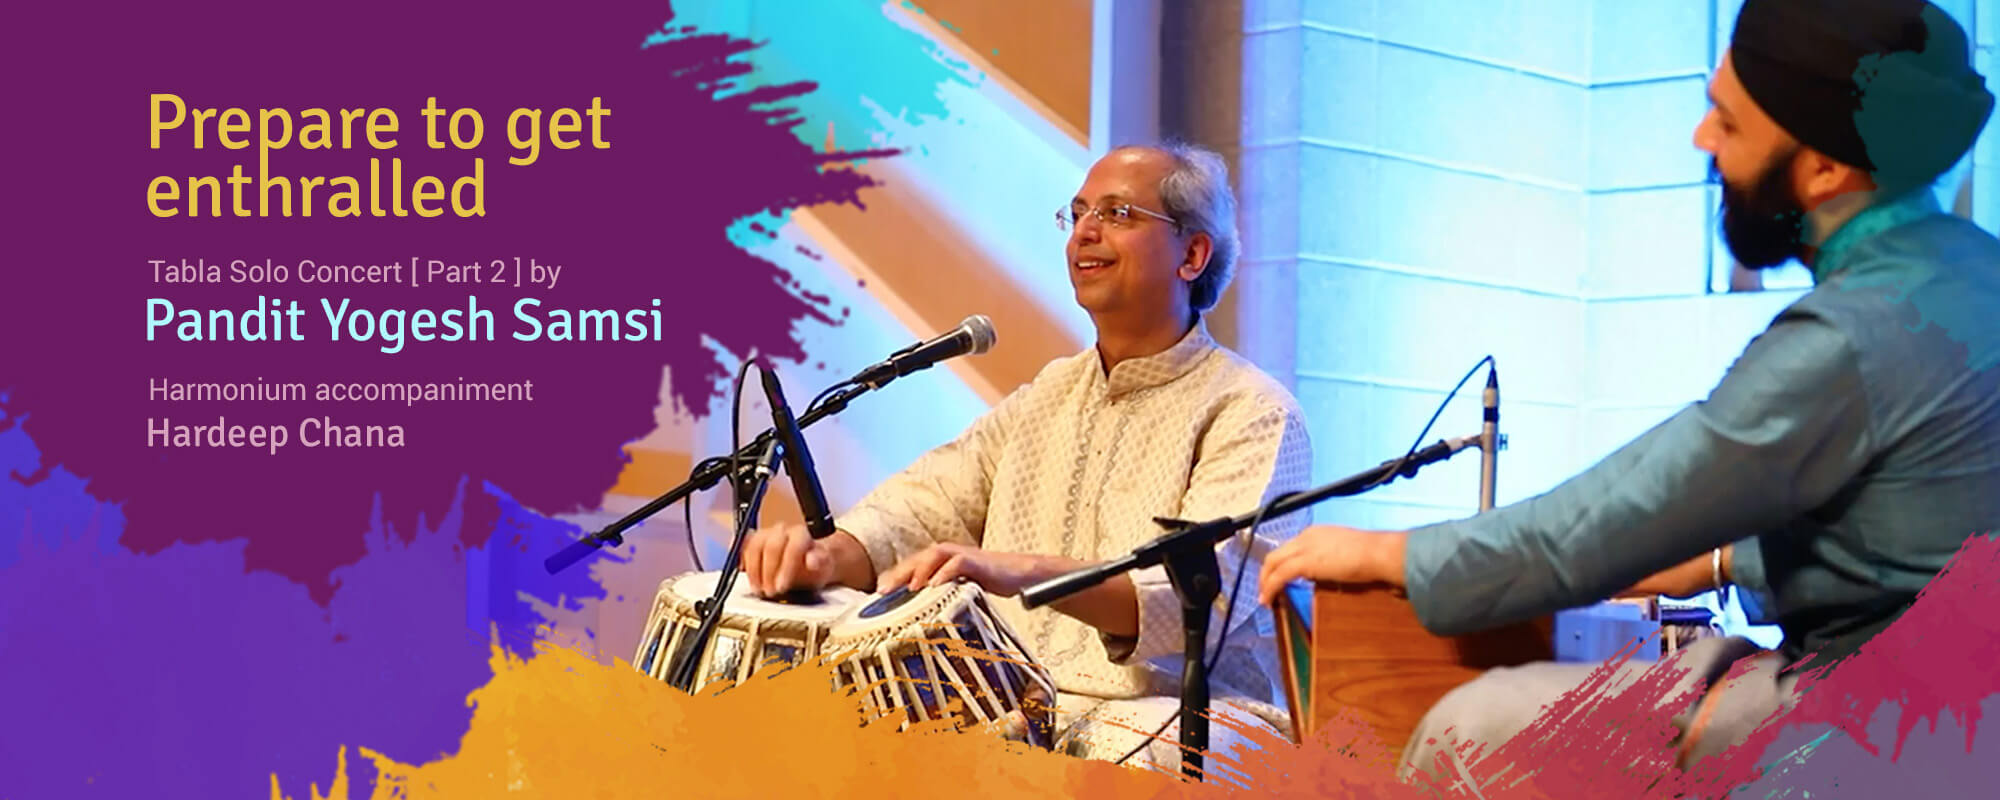 Pandit Yogesh Samsi tabla solo concert sangeet sabha